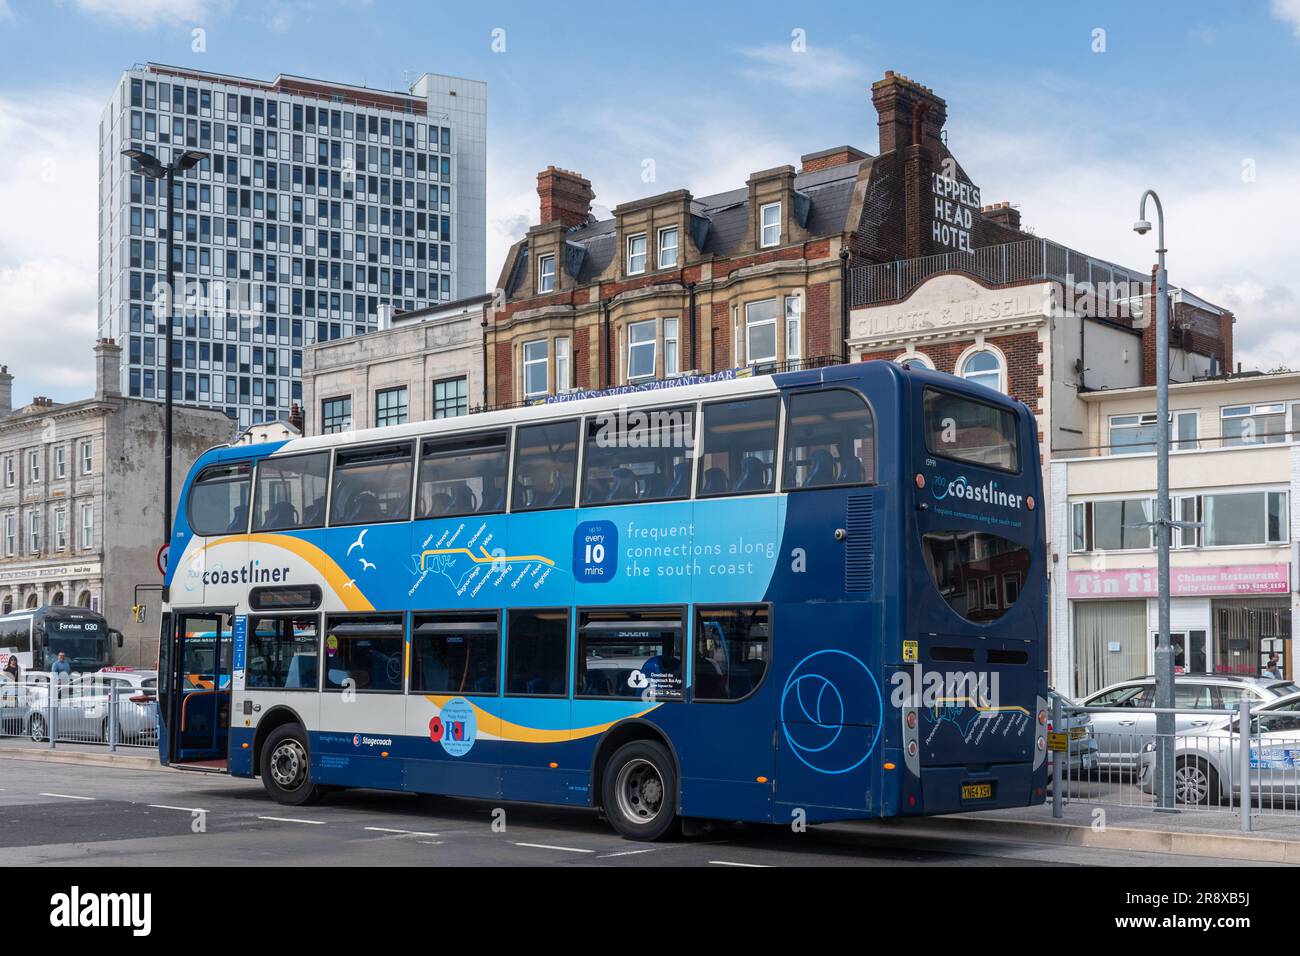 Coastliner double decker bus in Portsmouth, Hampshire, England, UK Stock Photo